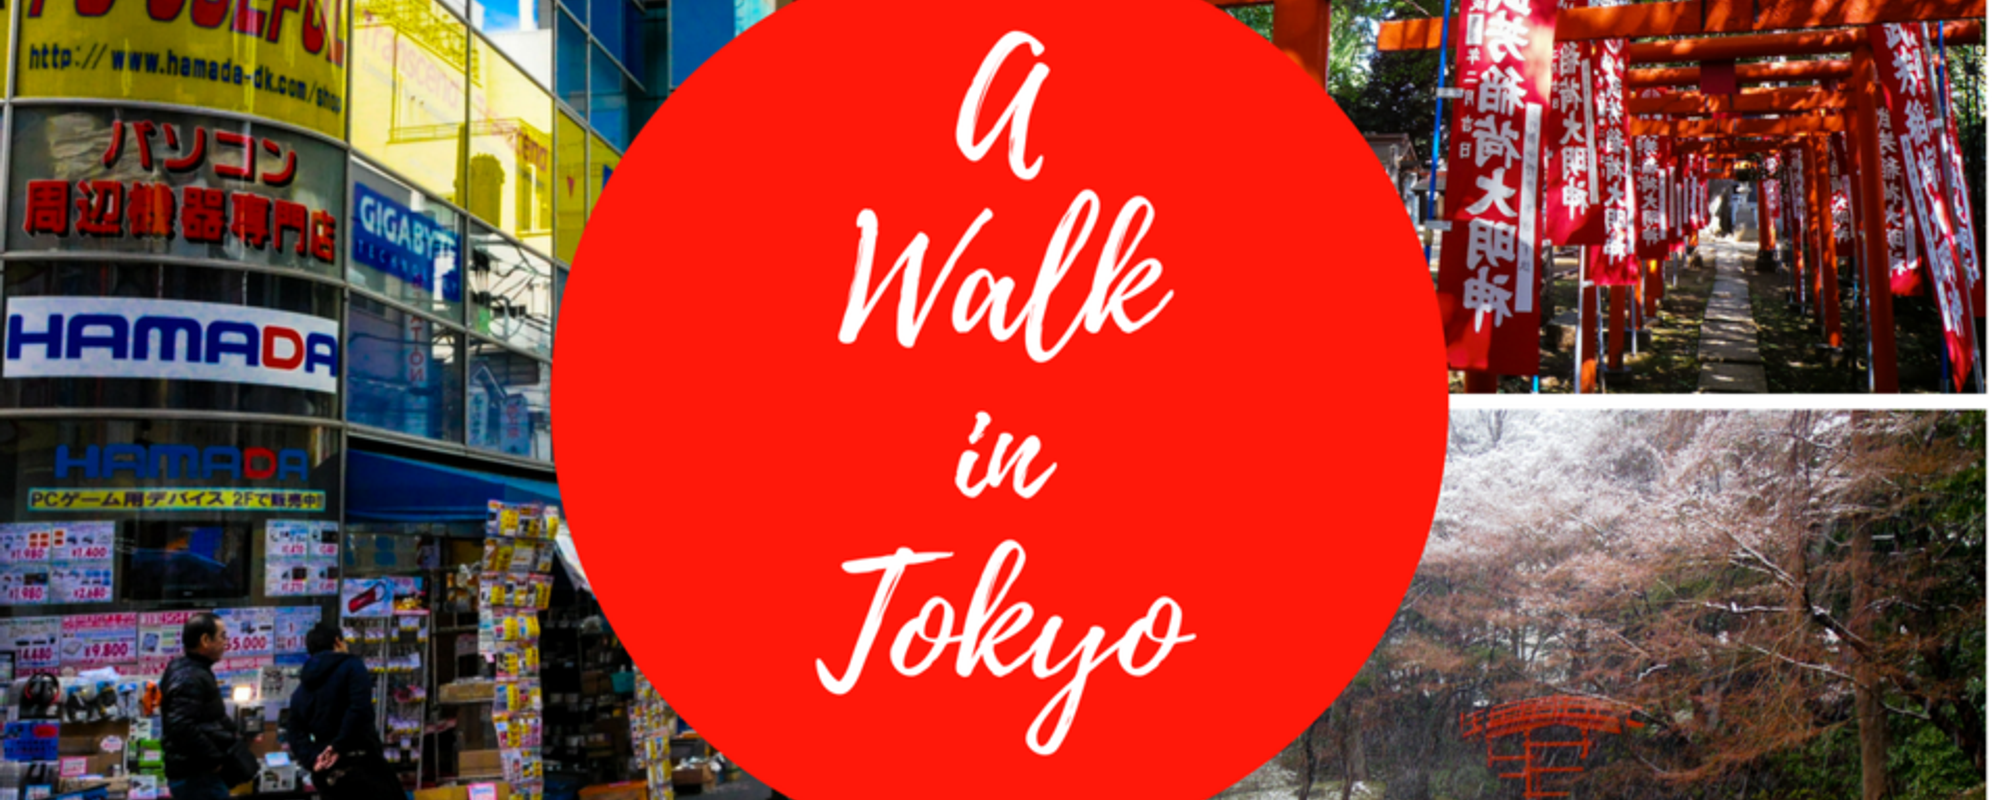 Take a walk in Tokyo